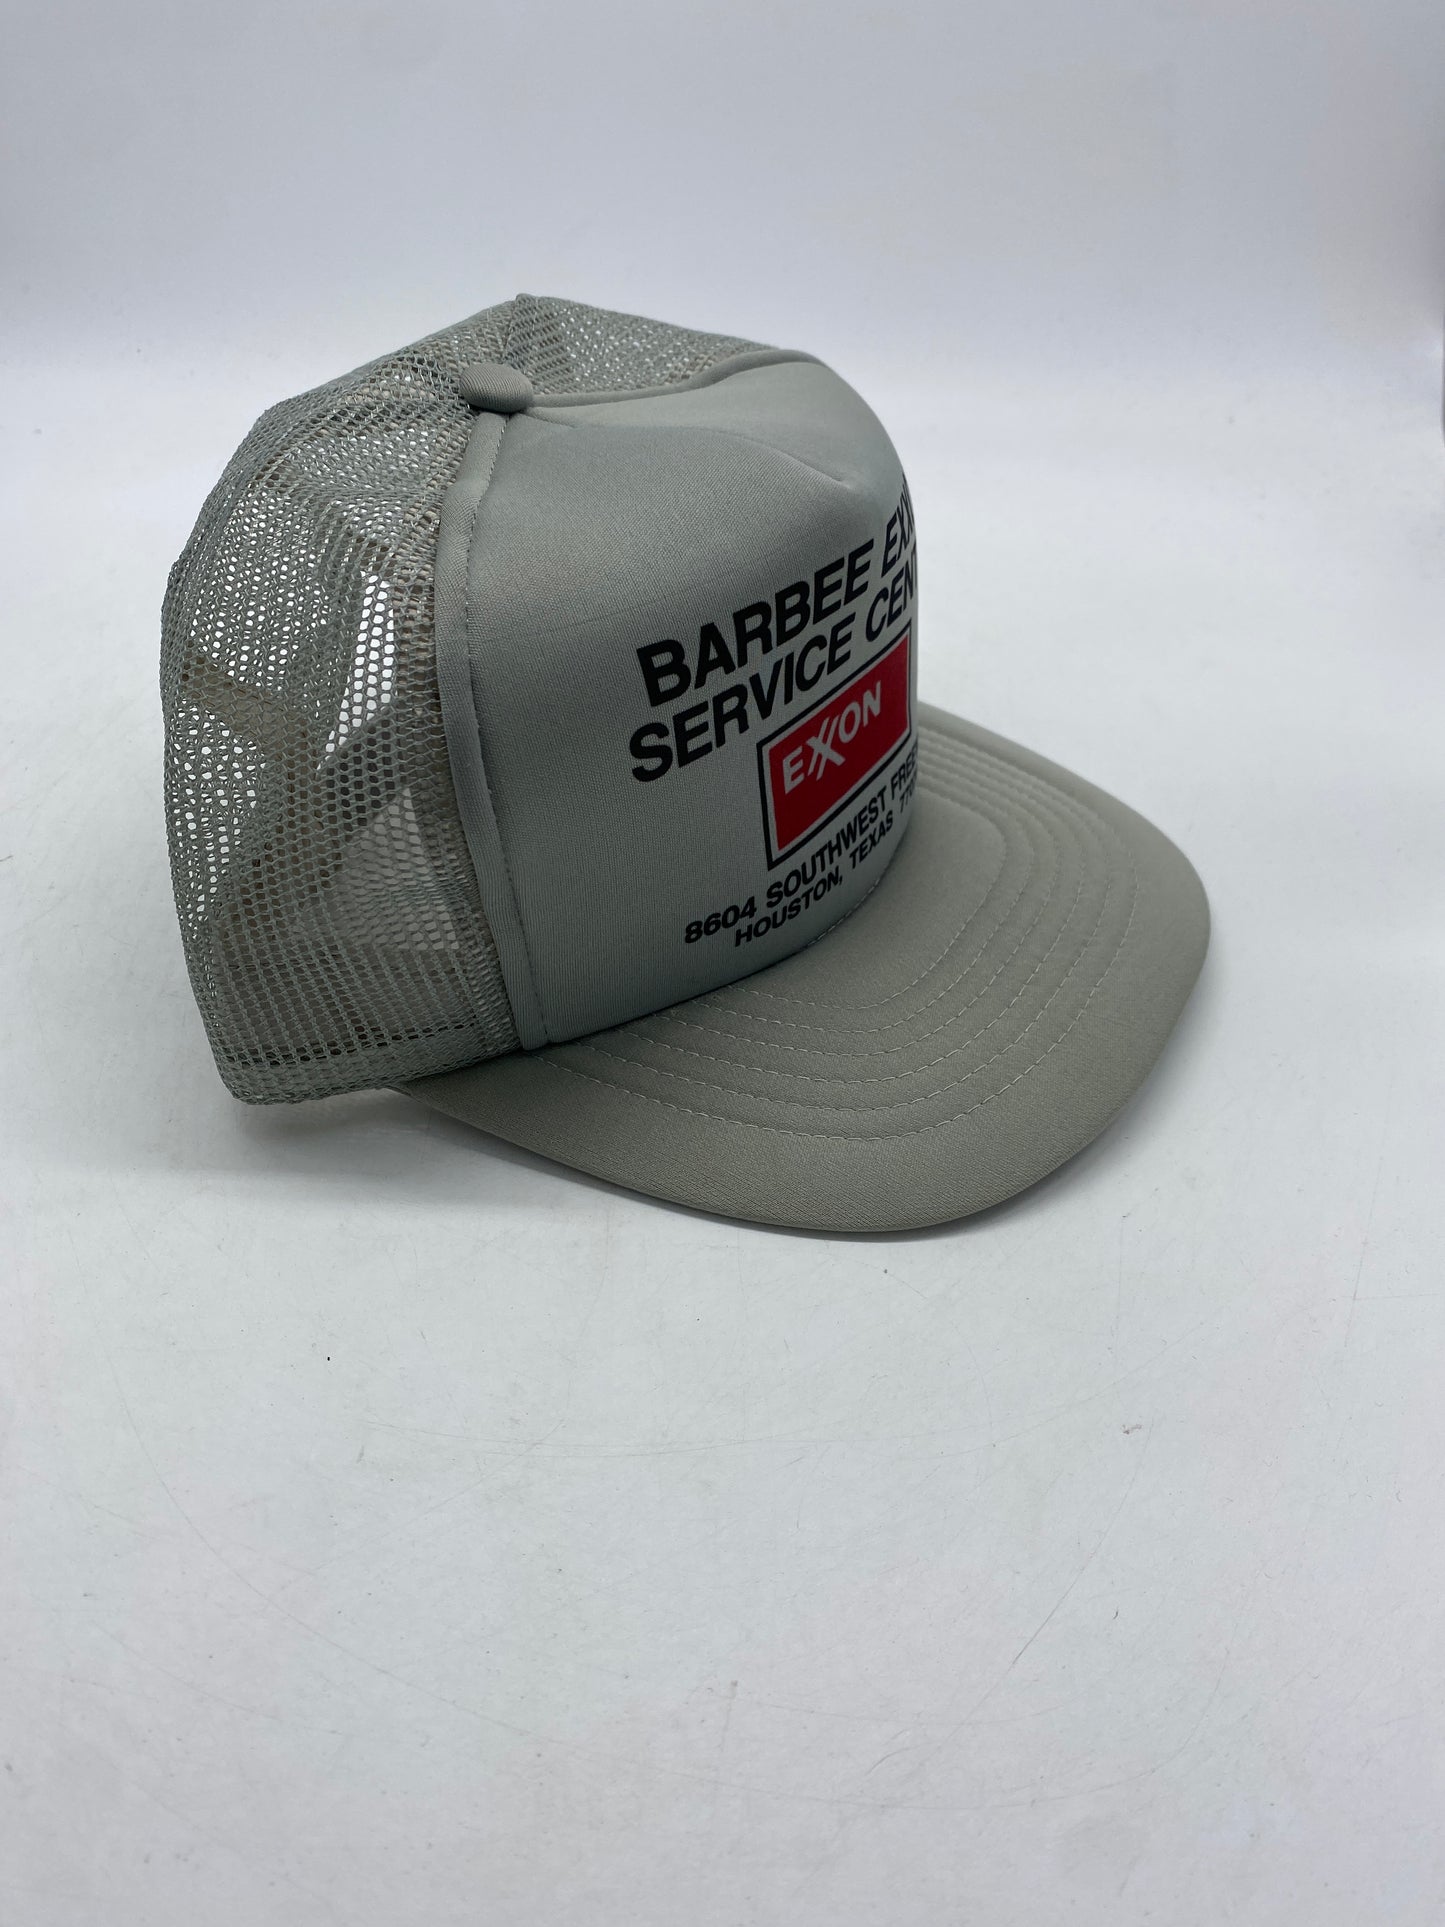 VTG Barbee Exxon SErvice Center Hat